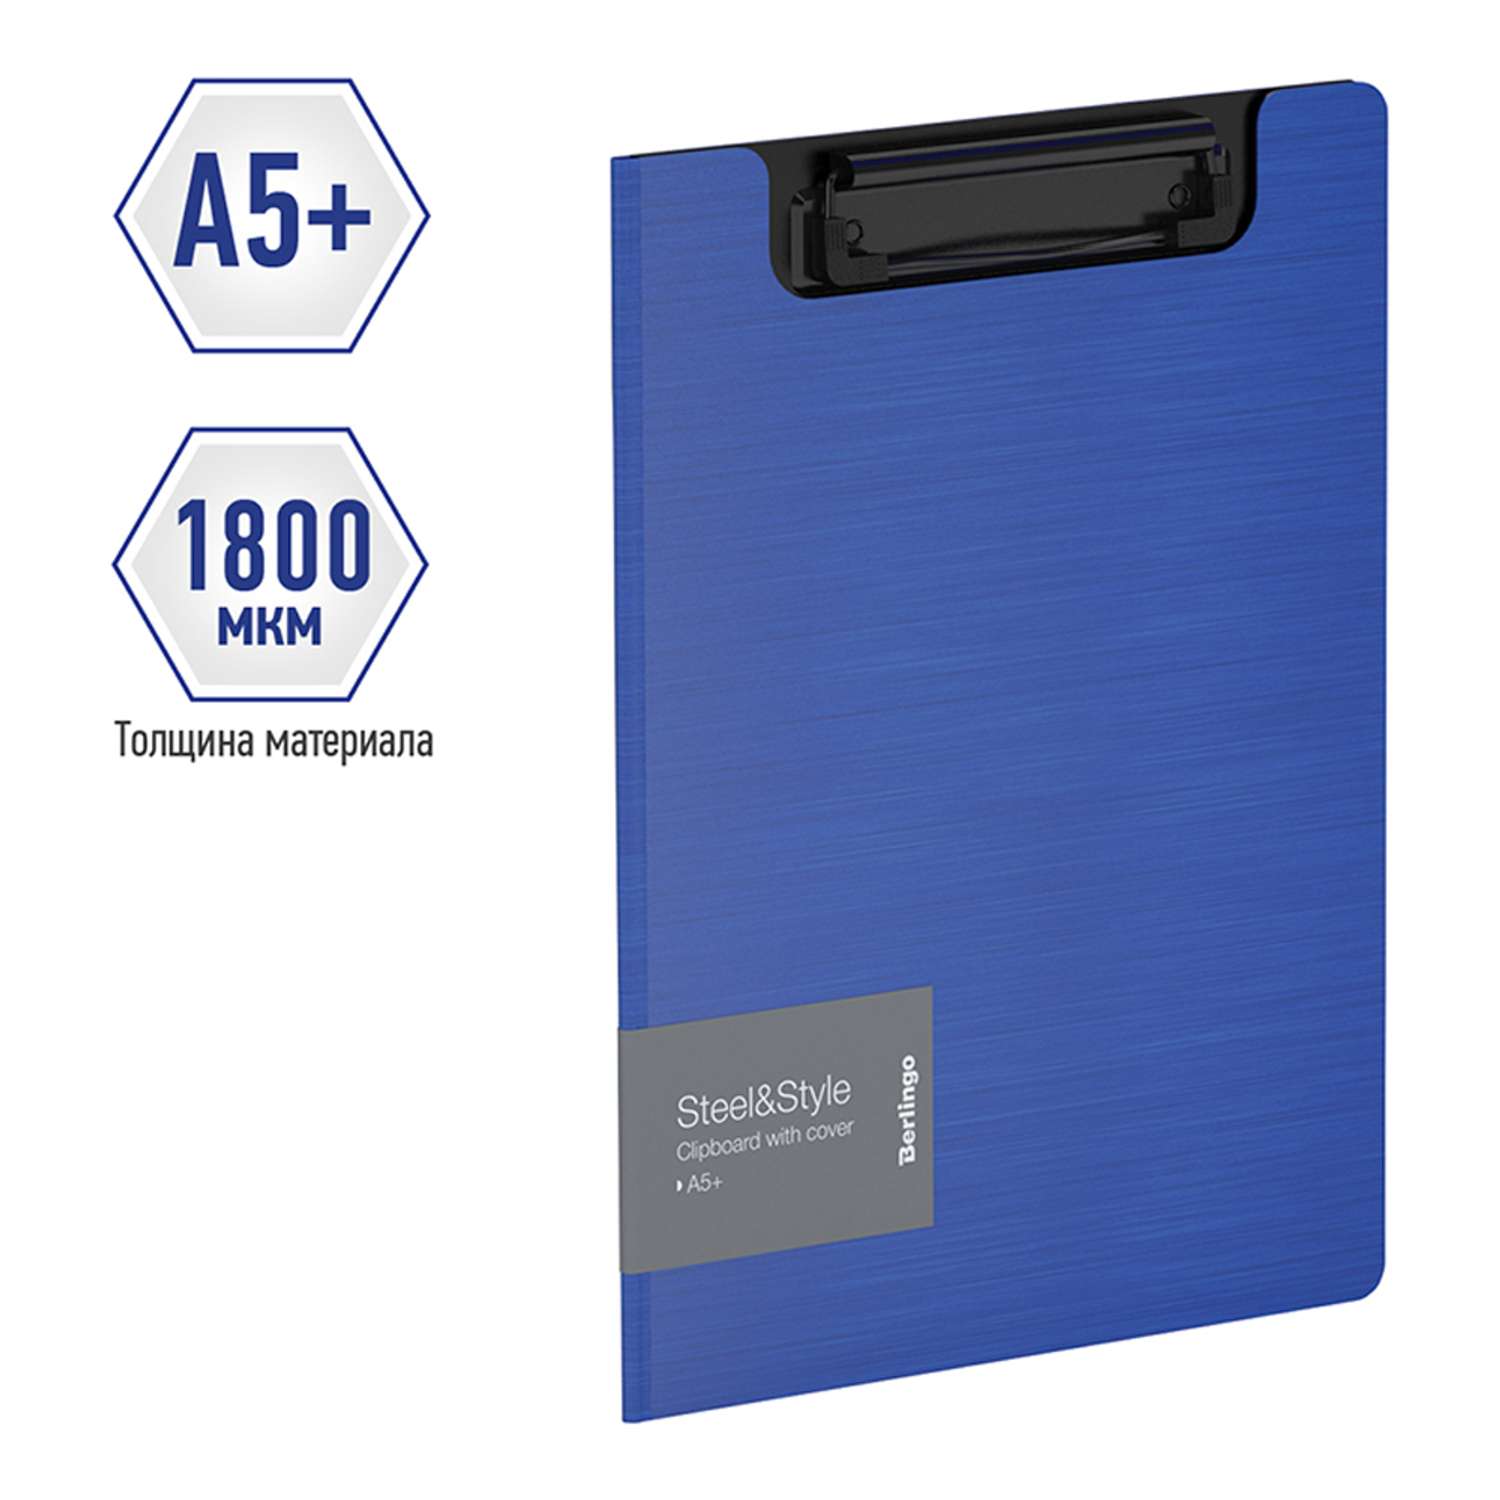 Папка-планшет с зажимом Berlingo Steel ampStyle А5+ 1800мкм пластик полифом синяя - фото 2